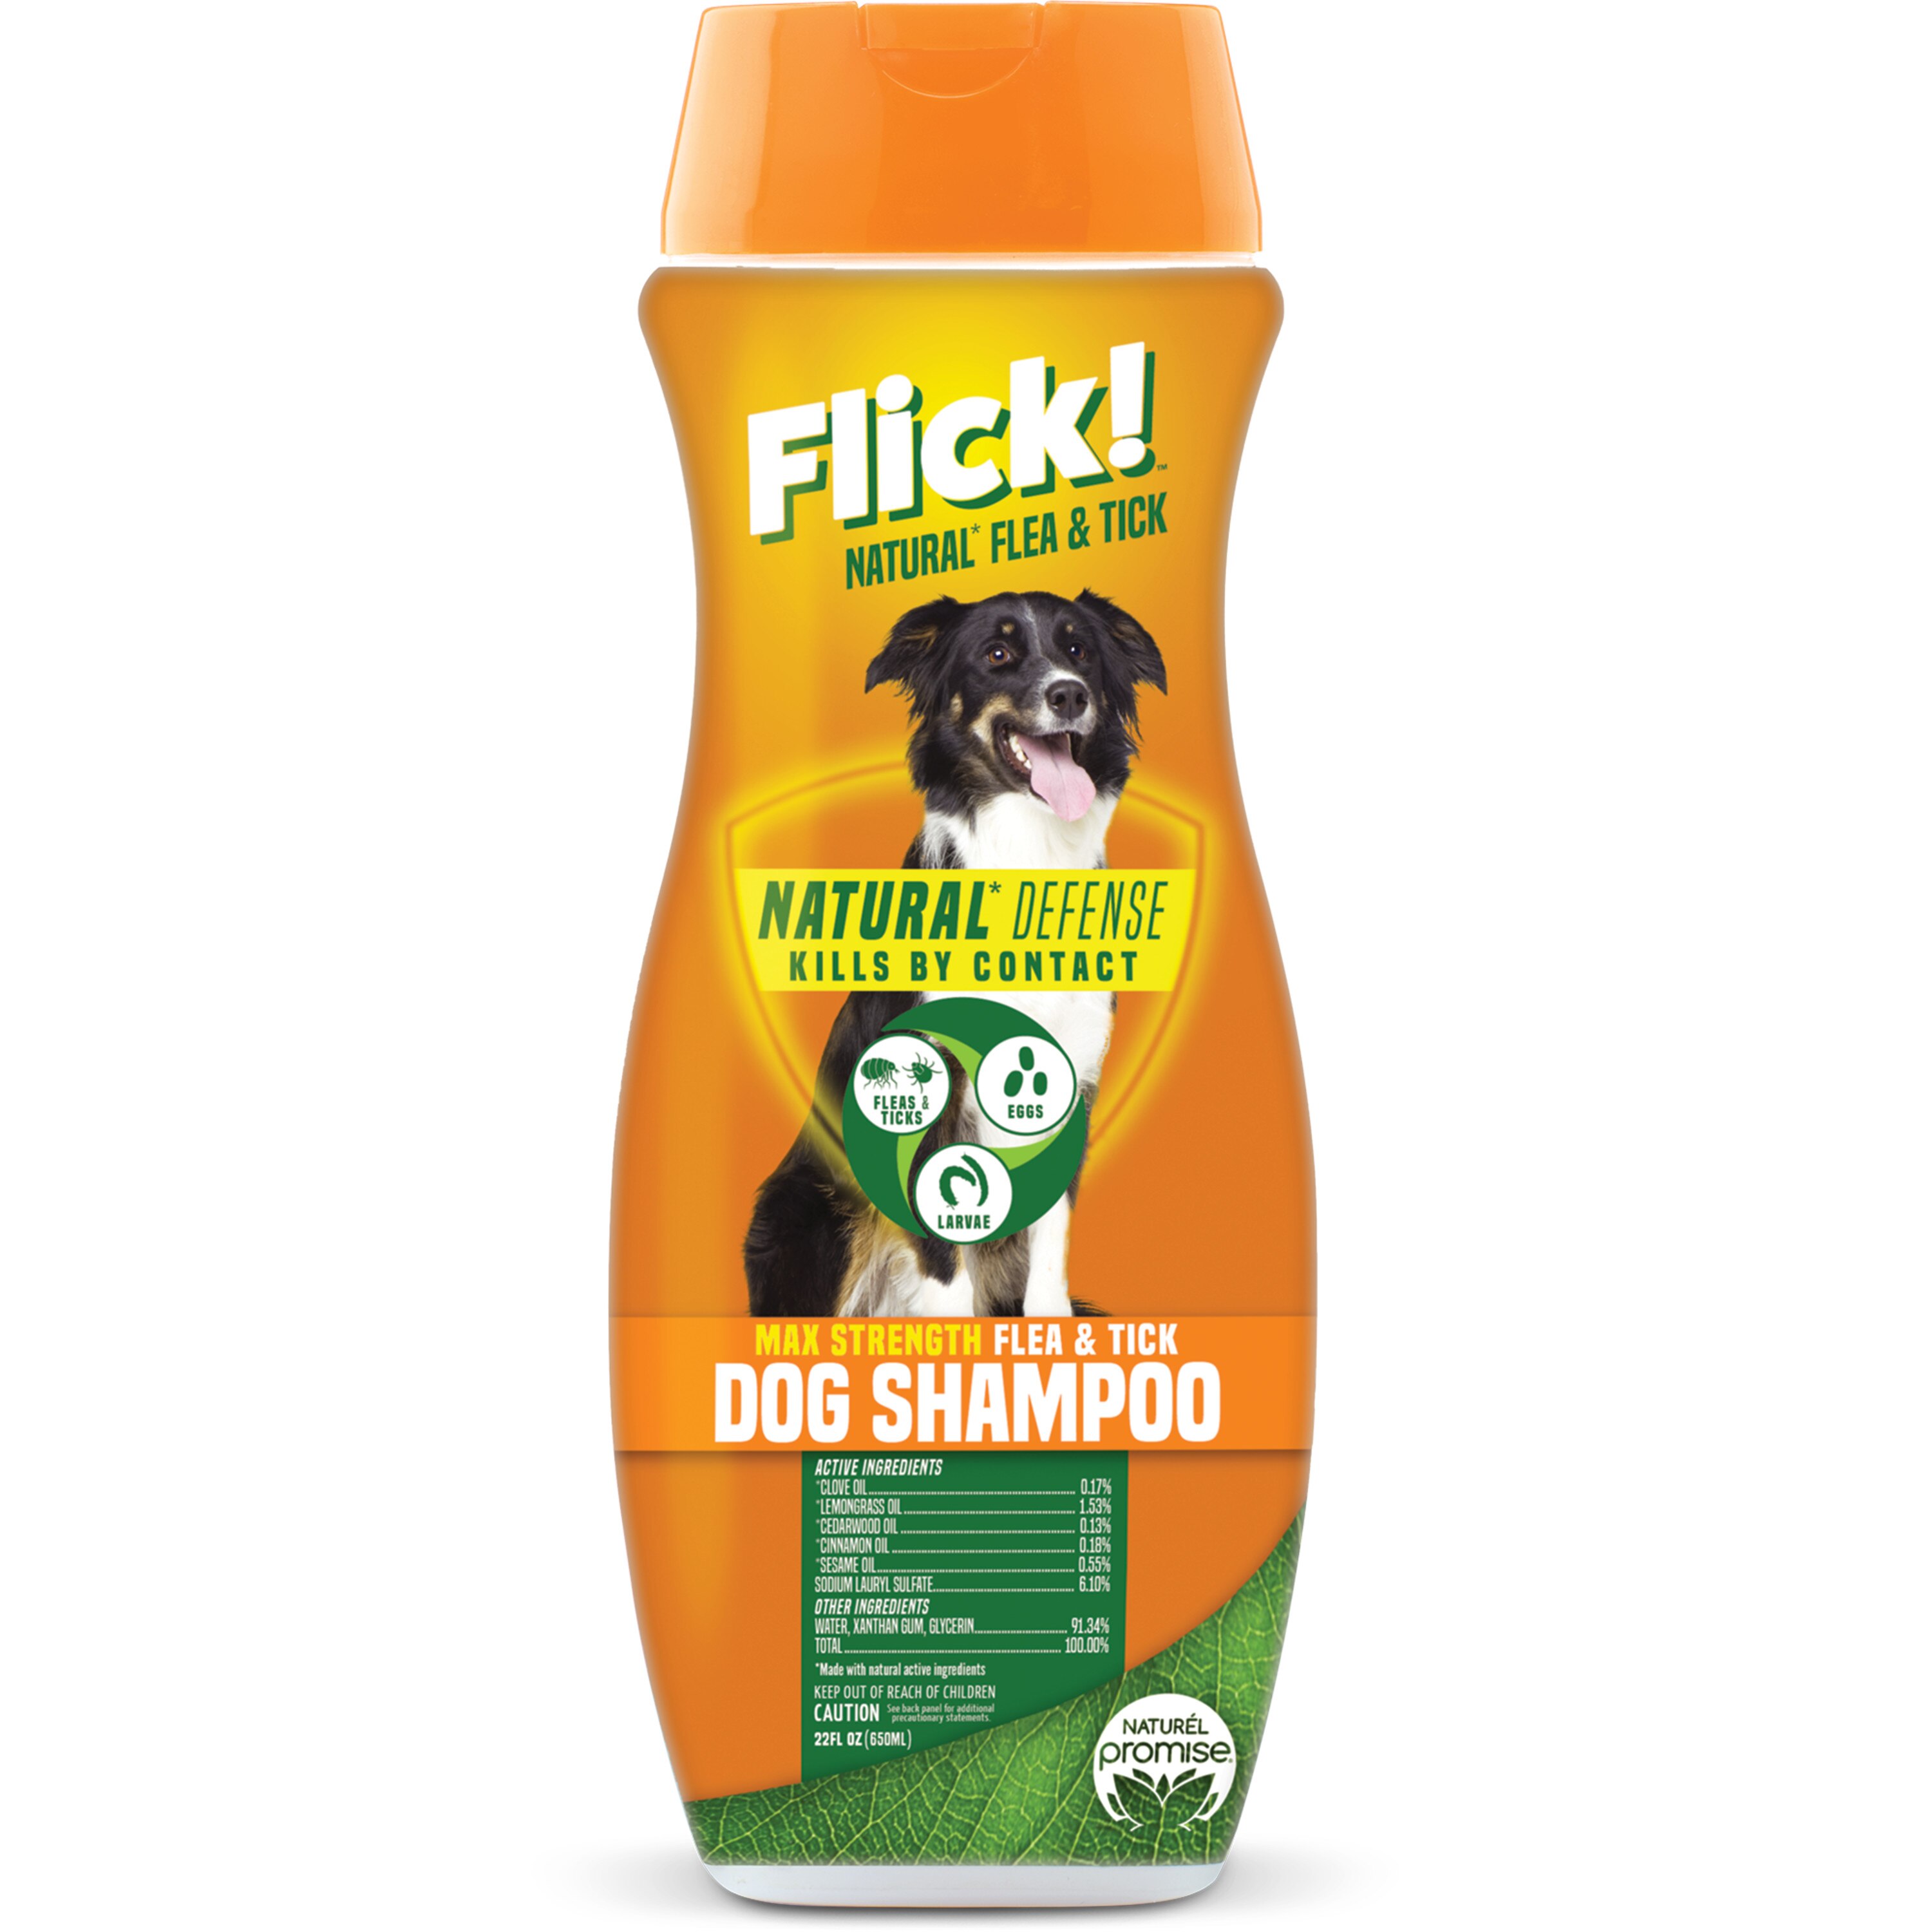 Naturel Promise Flick Max Strength Flea & Tick Dog Shampoo, 22 Oz , CVS